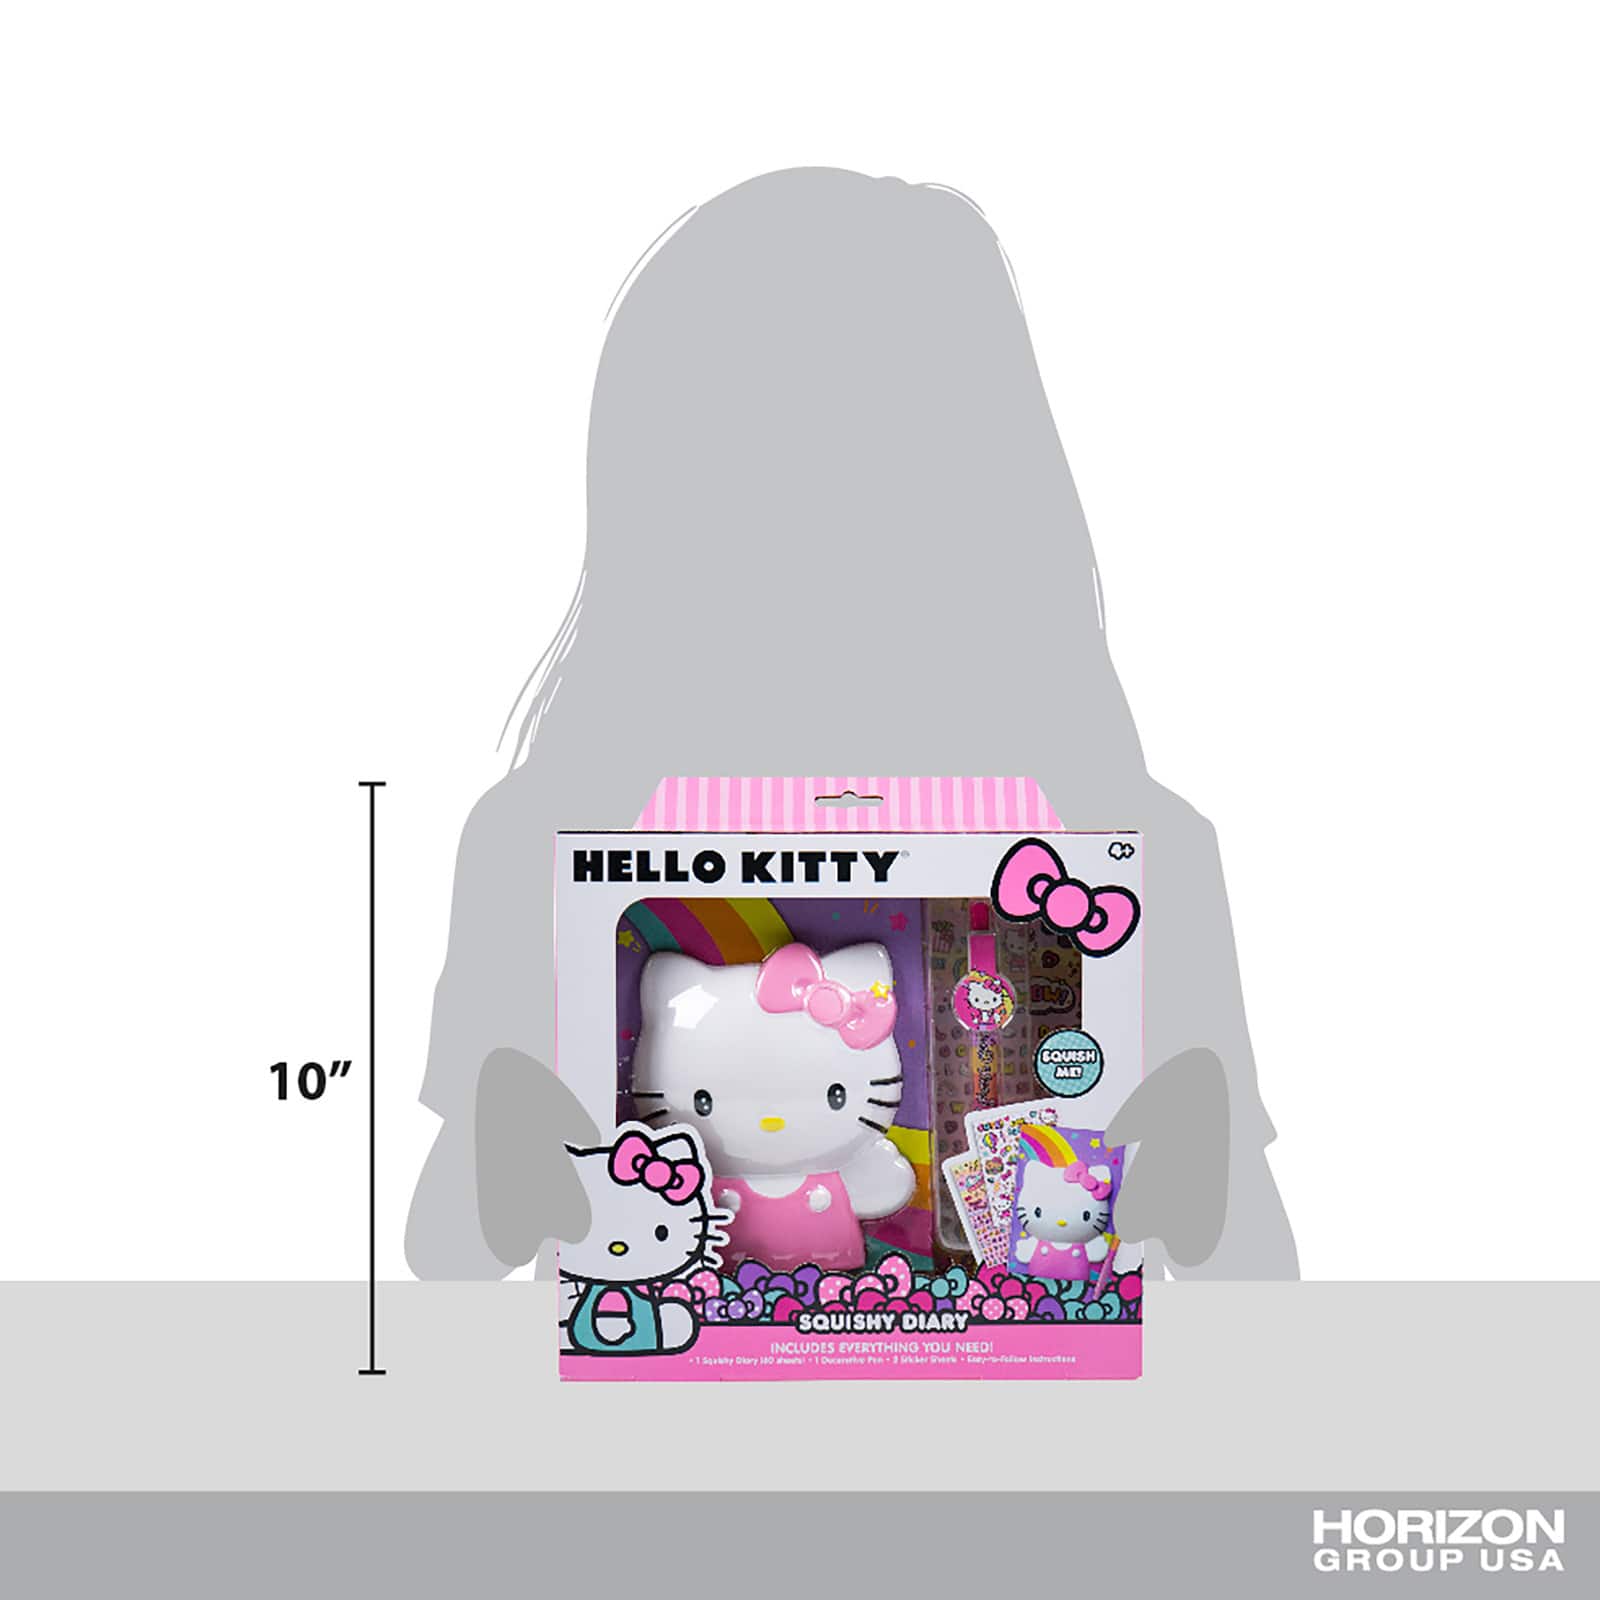 Hello Kitty&#xAE; Squishy Diary